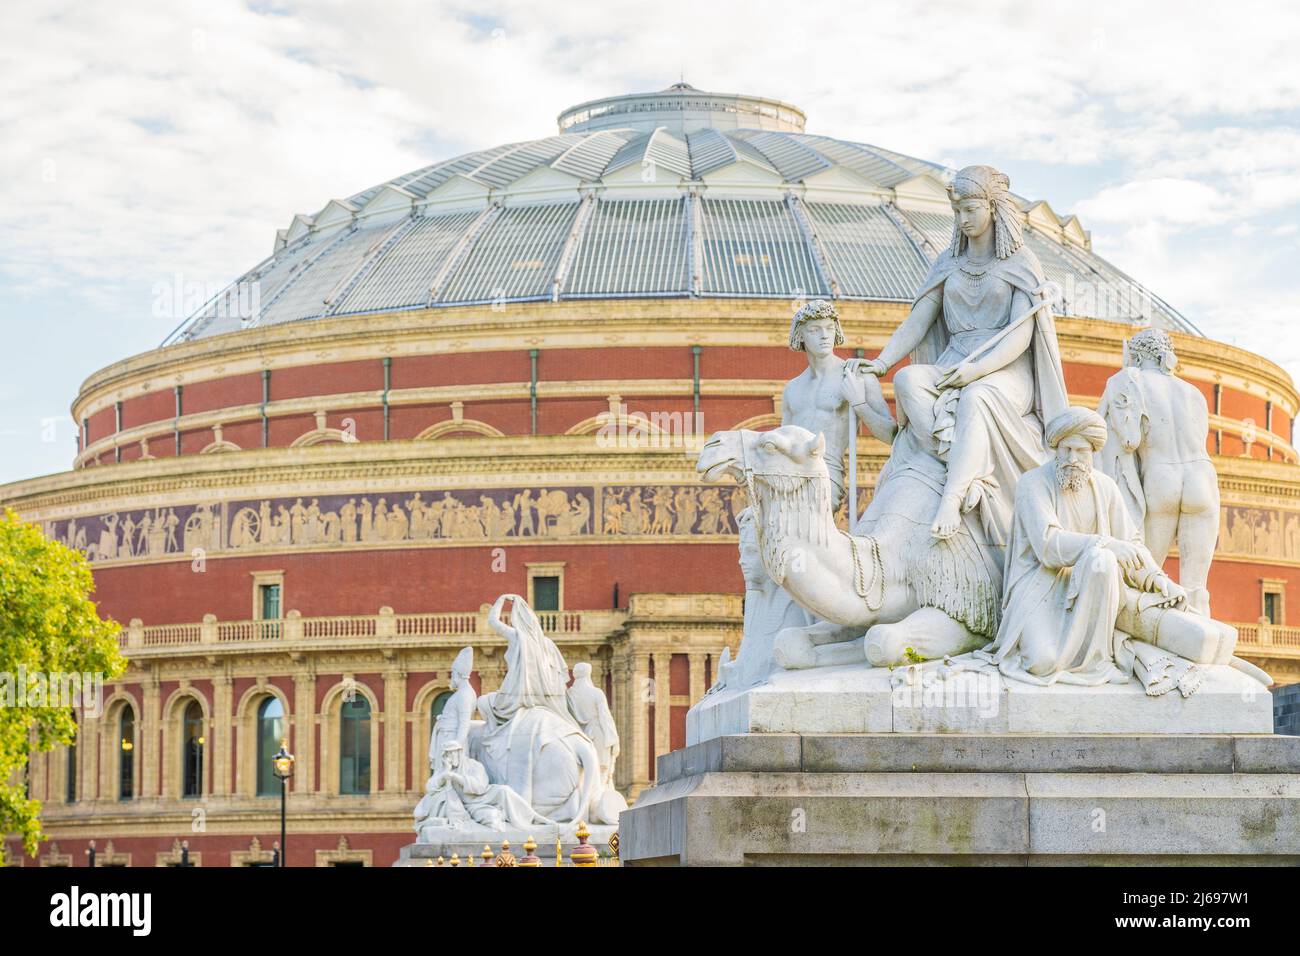 The Royal Albert Hall, London, England, United Kingdom Stock Photo